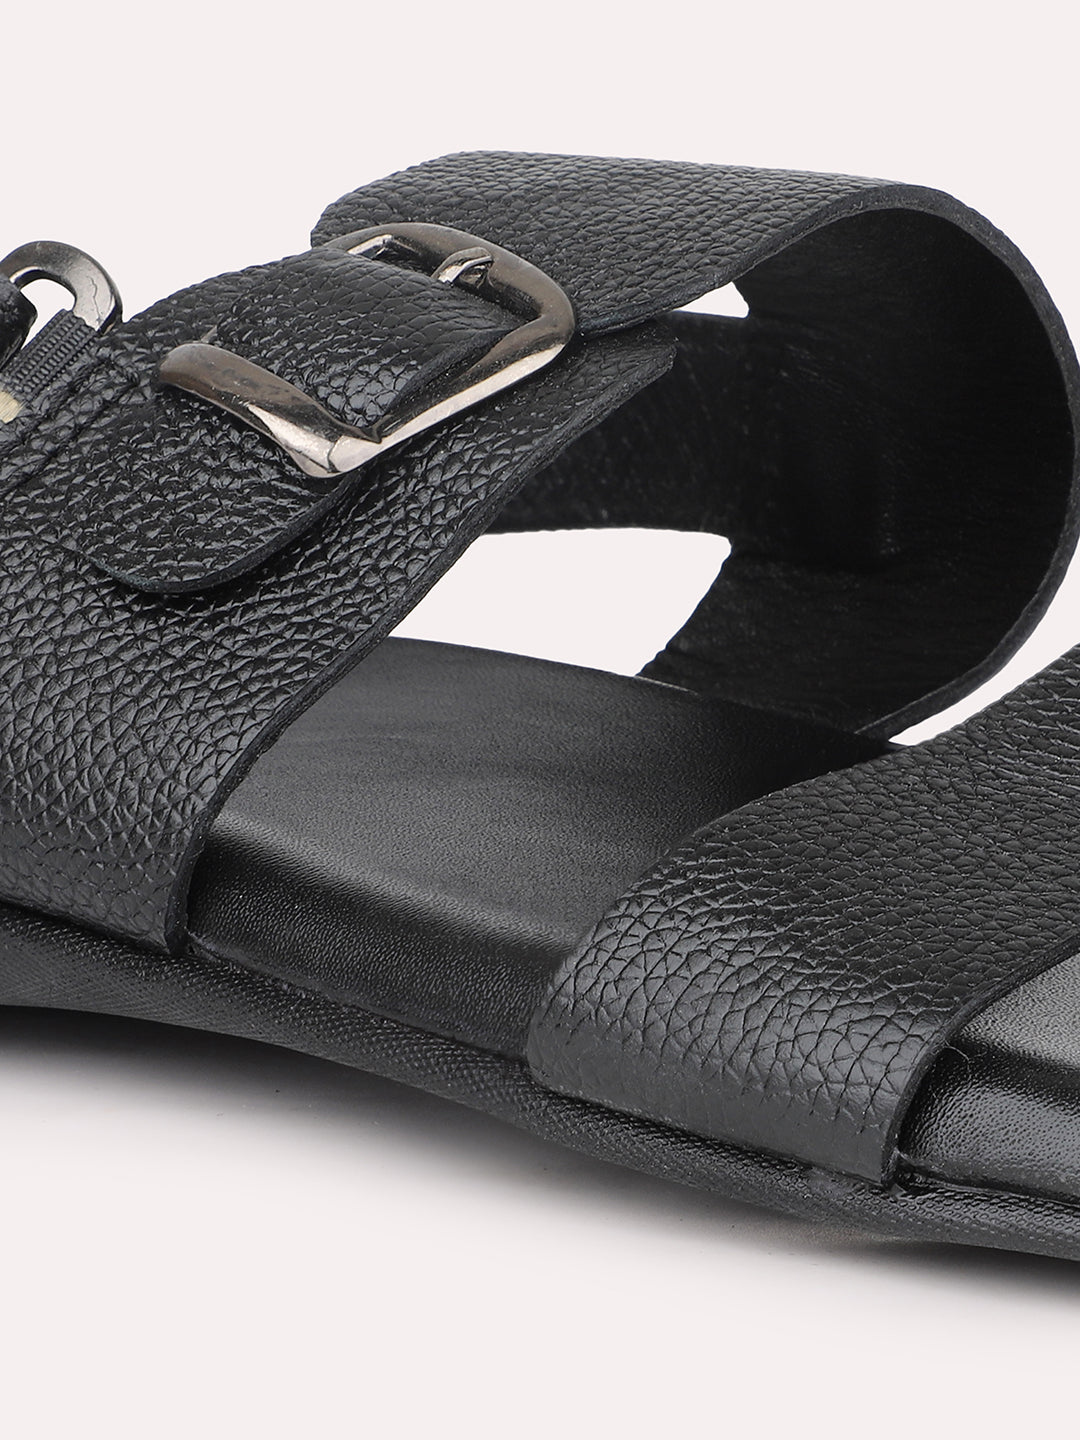 Atesber Black Formal Sandal With Buckle For Mens